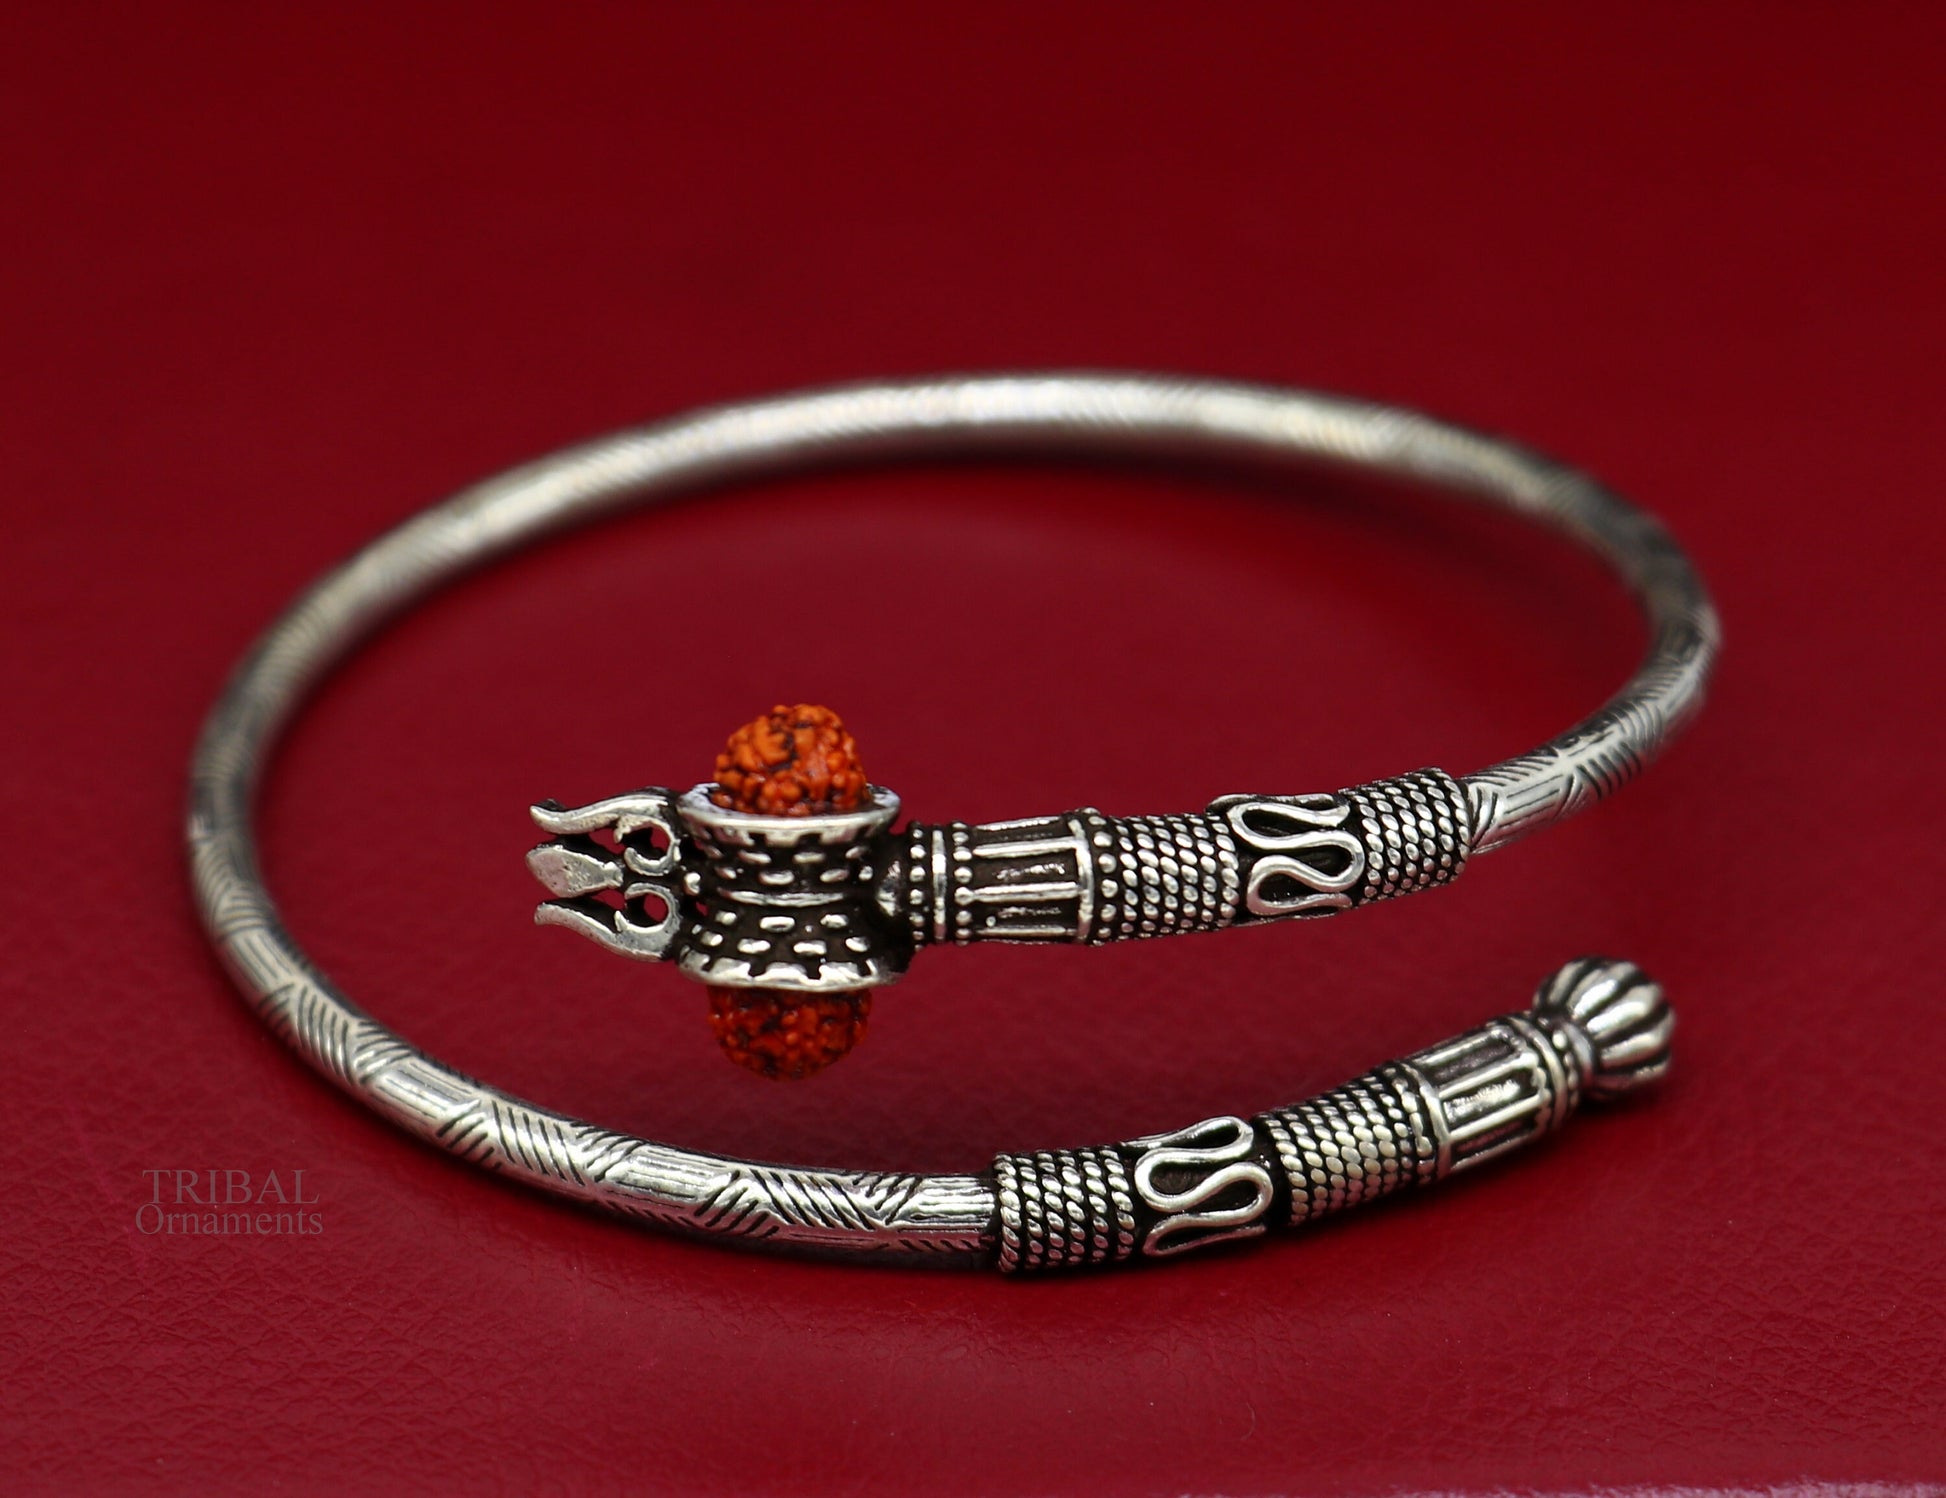 925 sterling silver Lord shiva trident trishool kada bangle bracelet with fabulous natural rudraksha antique jewelry nssk673 - TRIBAL ORNAMENTS